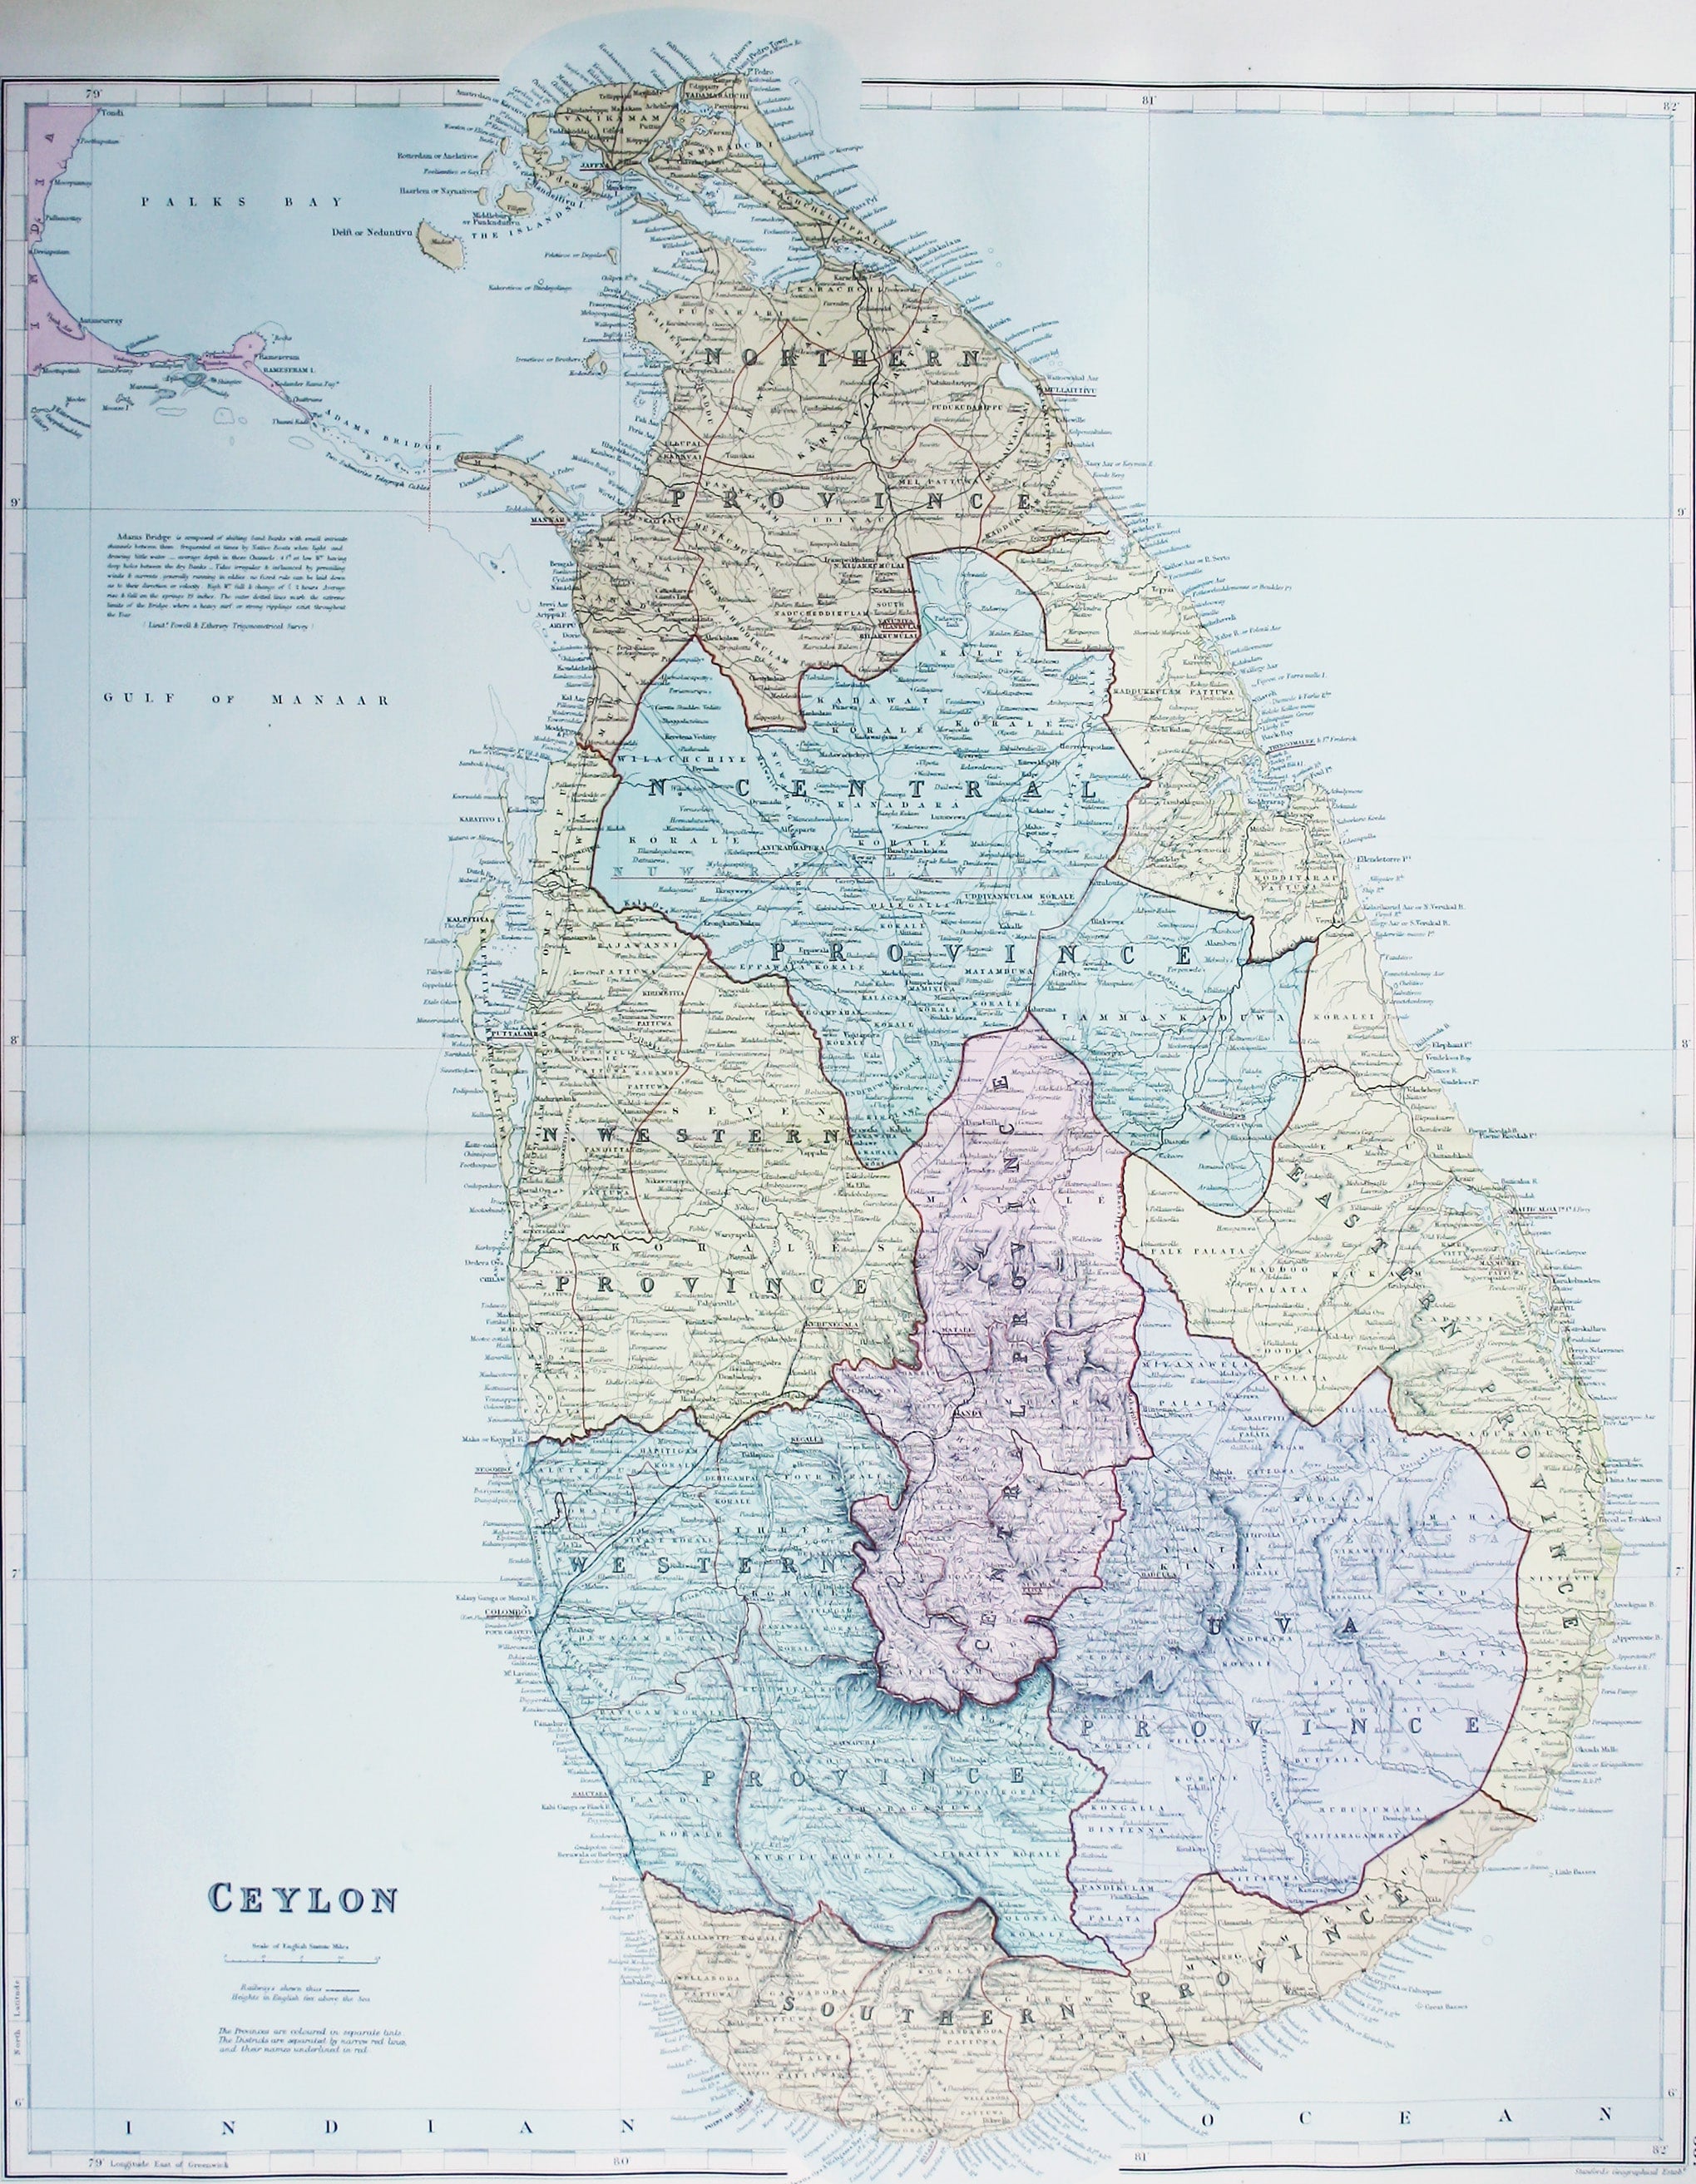 Stanford’s Map of Sri Lanka